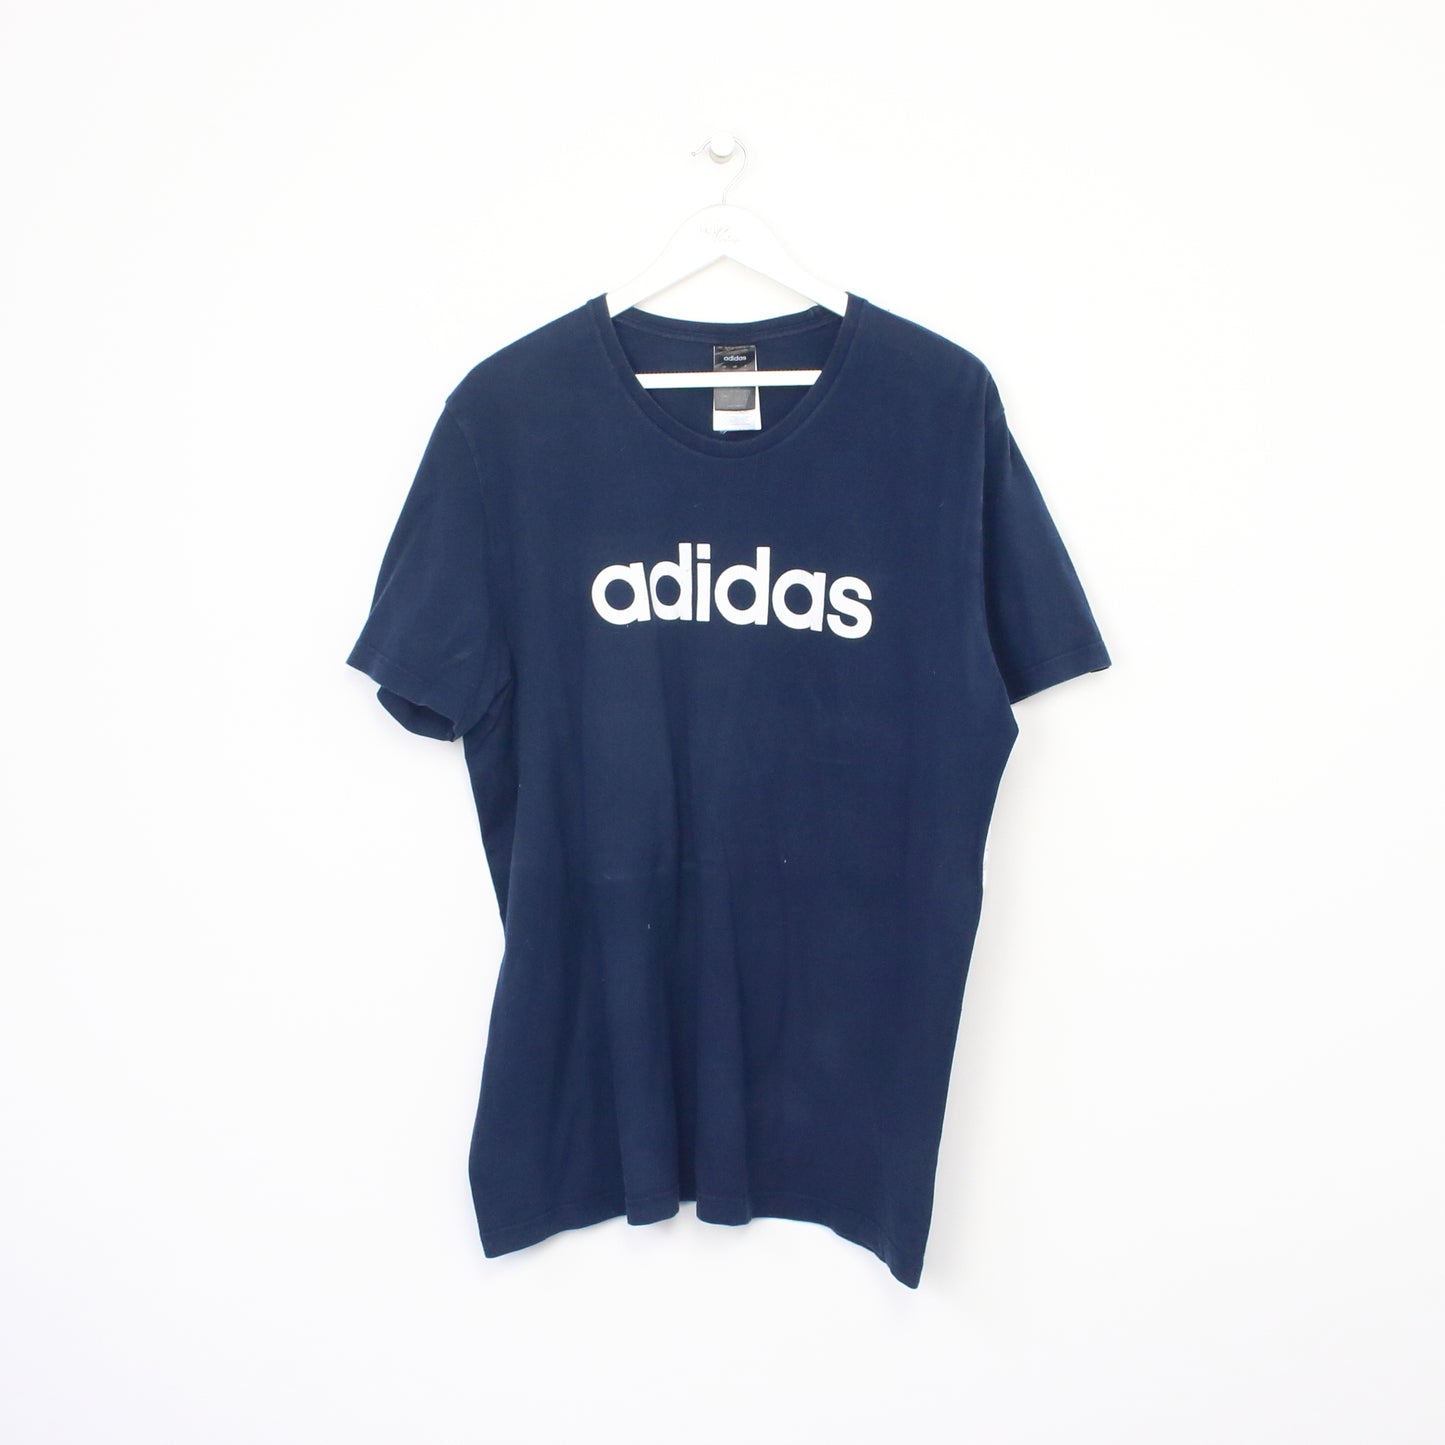 Vintage Adidas t-shirt in blue. Best fits XL